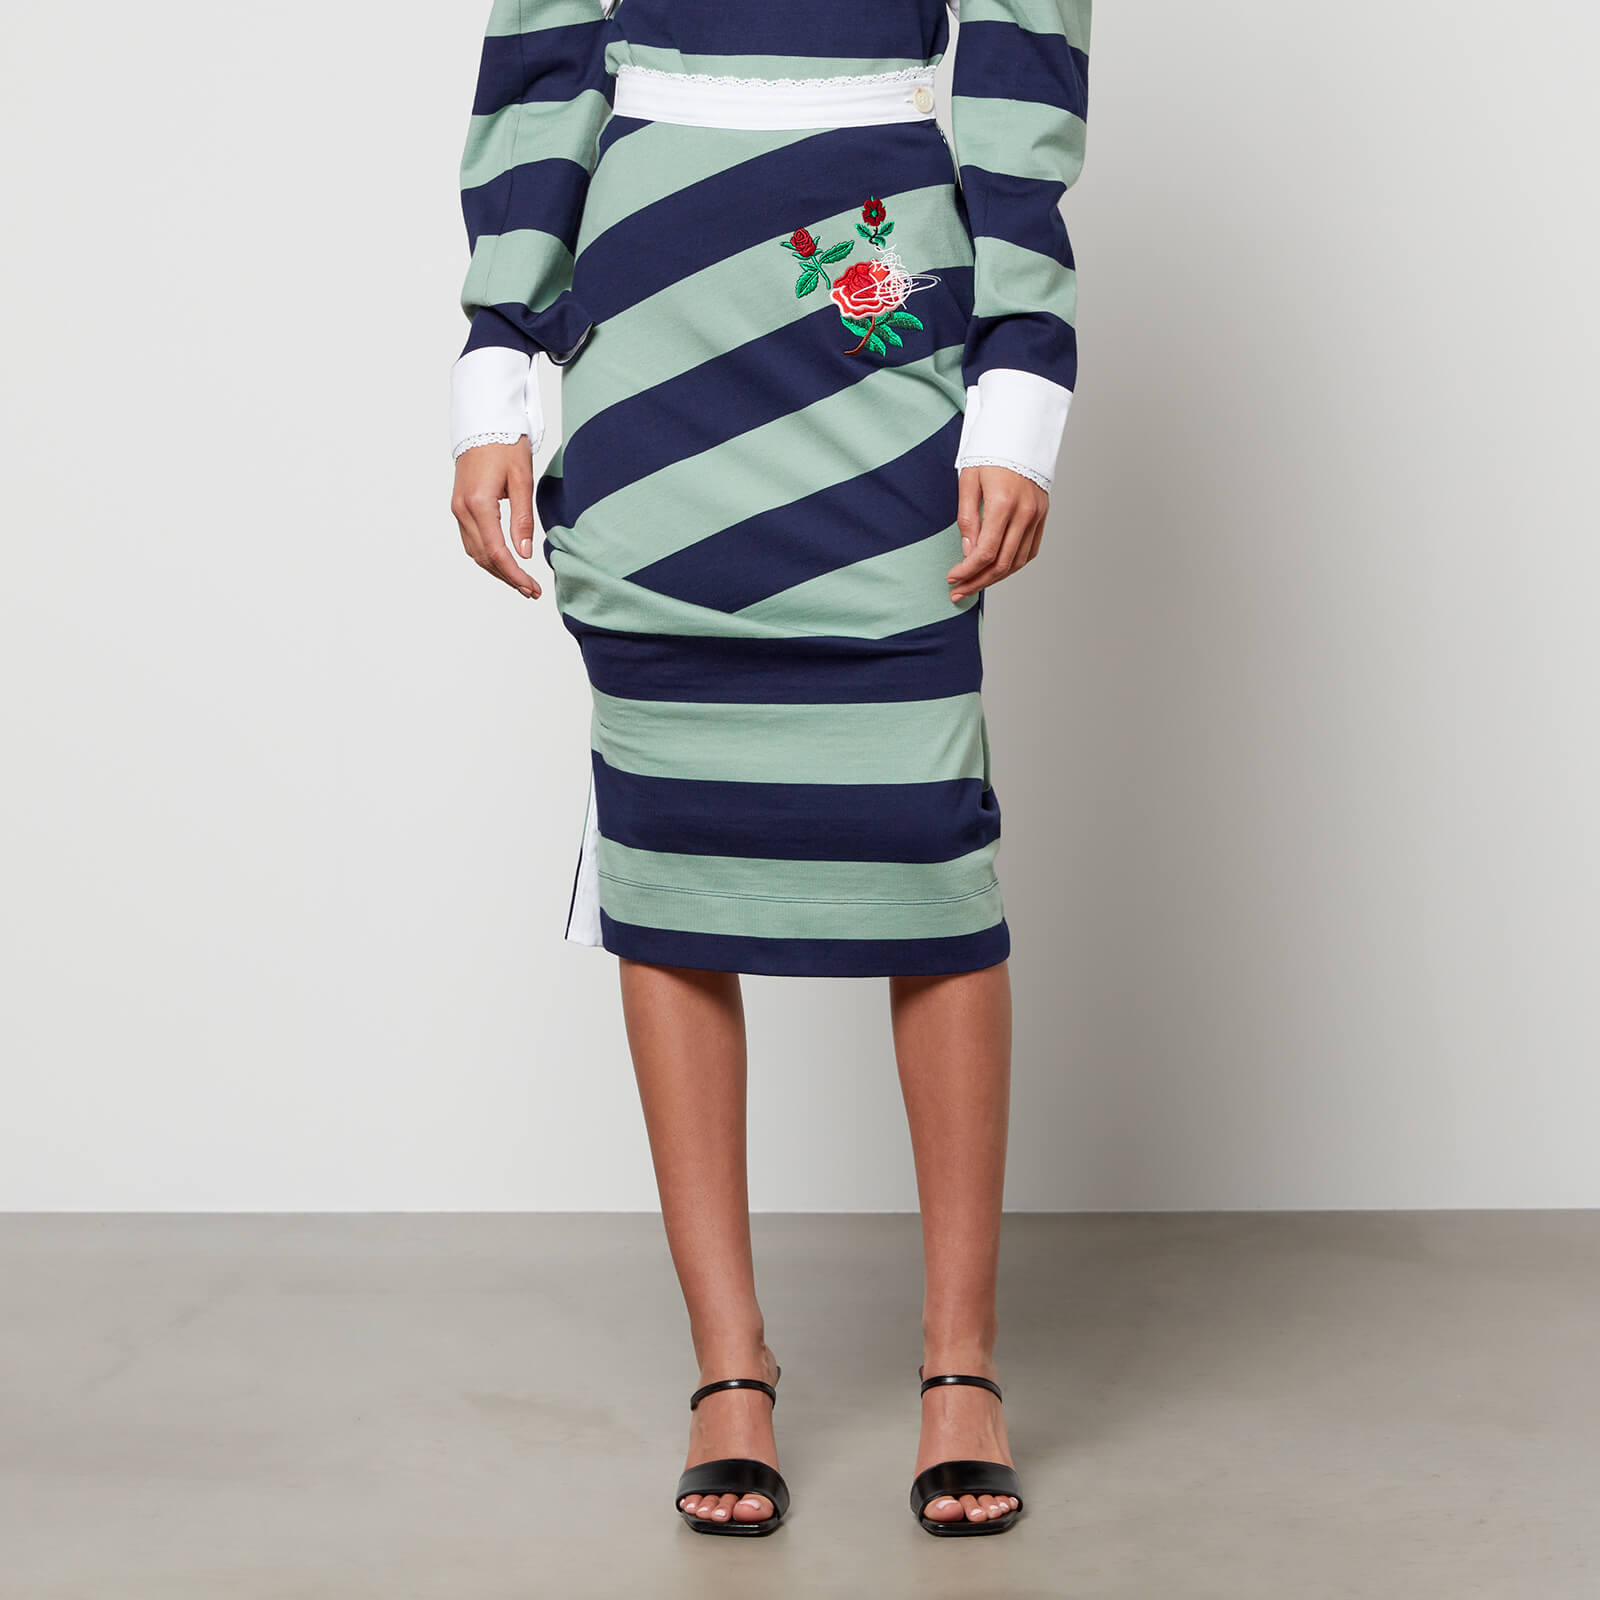 Vivienne Westwood Women's Anathema Skirt - Green/Navy - S